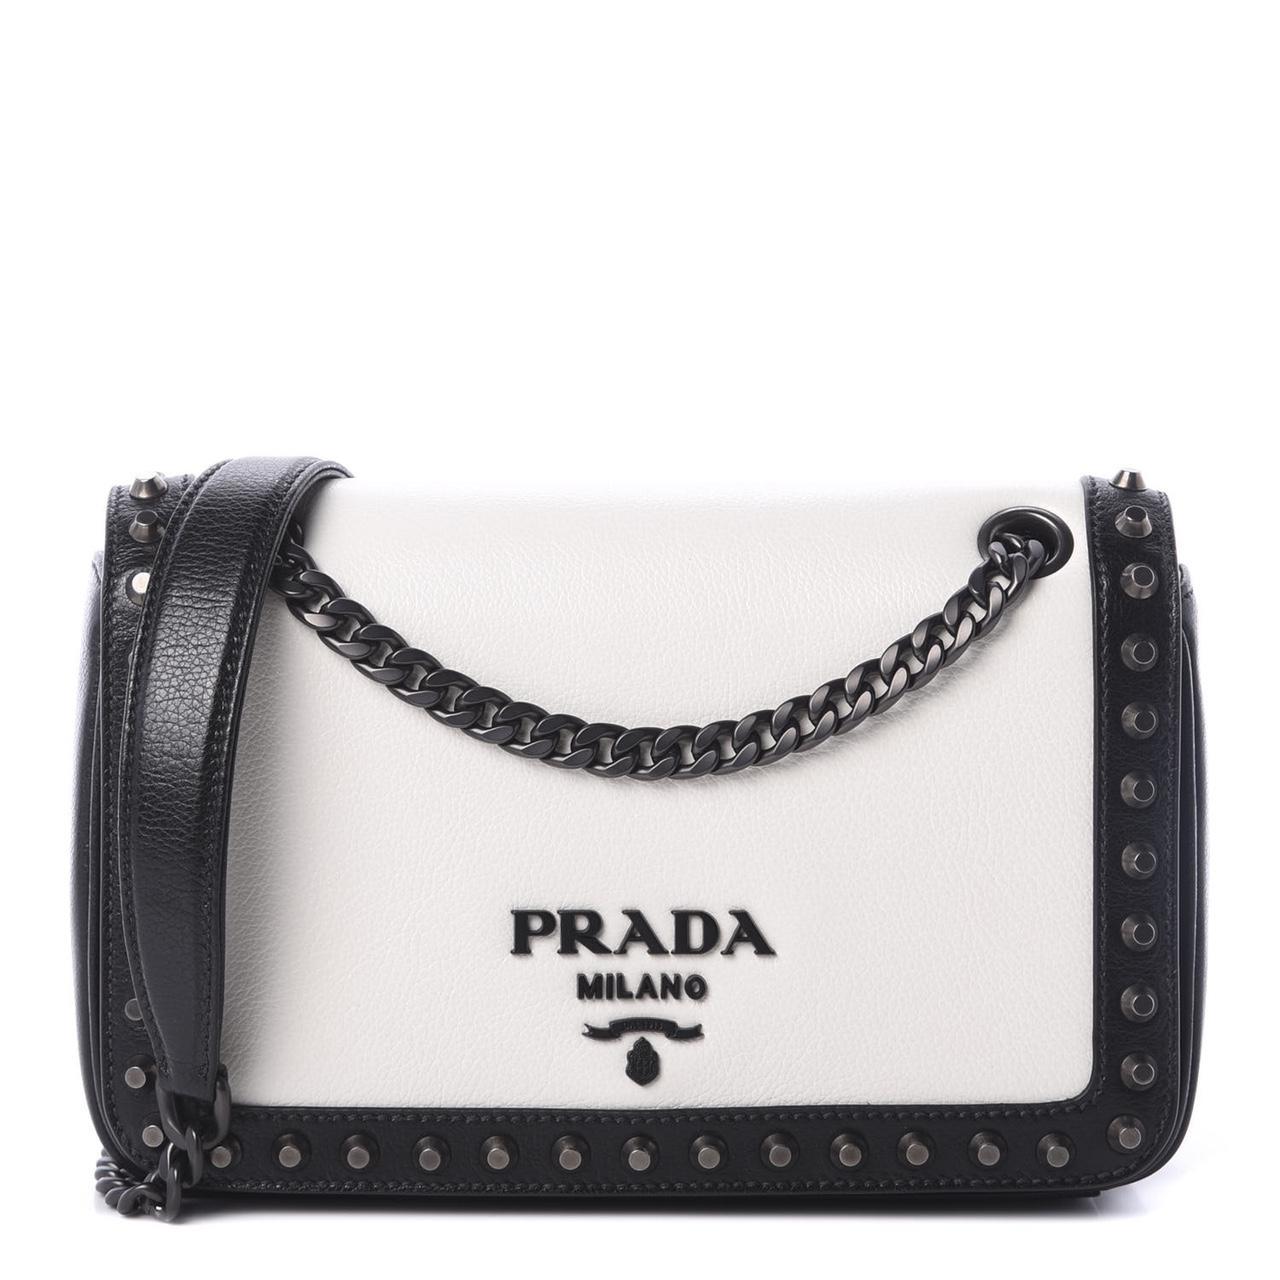 PRADA Prada Pattina Glace Calf Leather Nero Black Pattina Studded